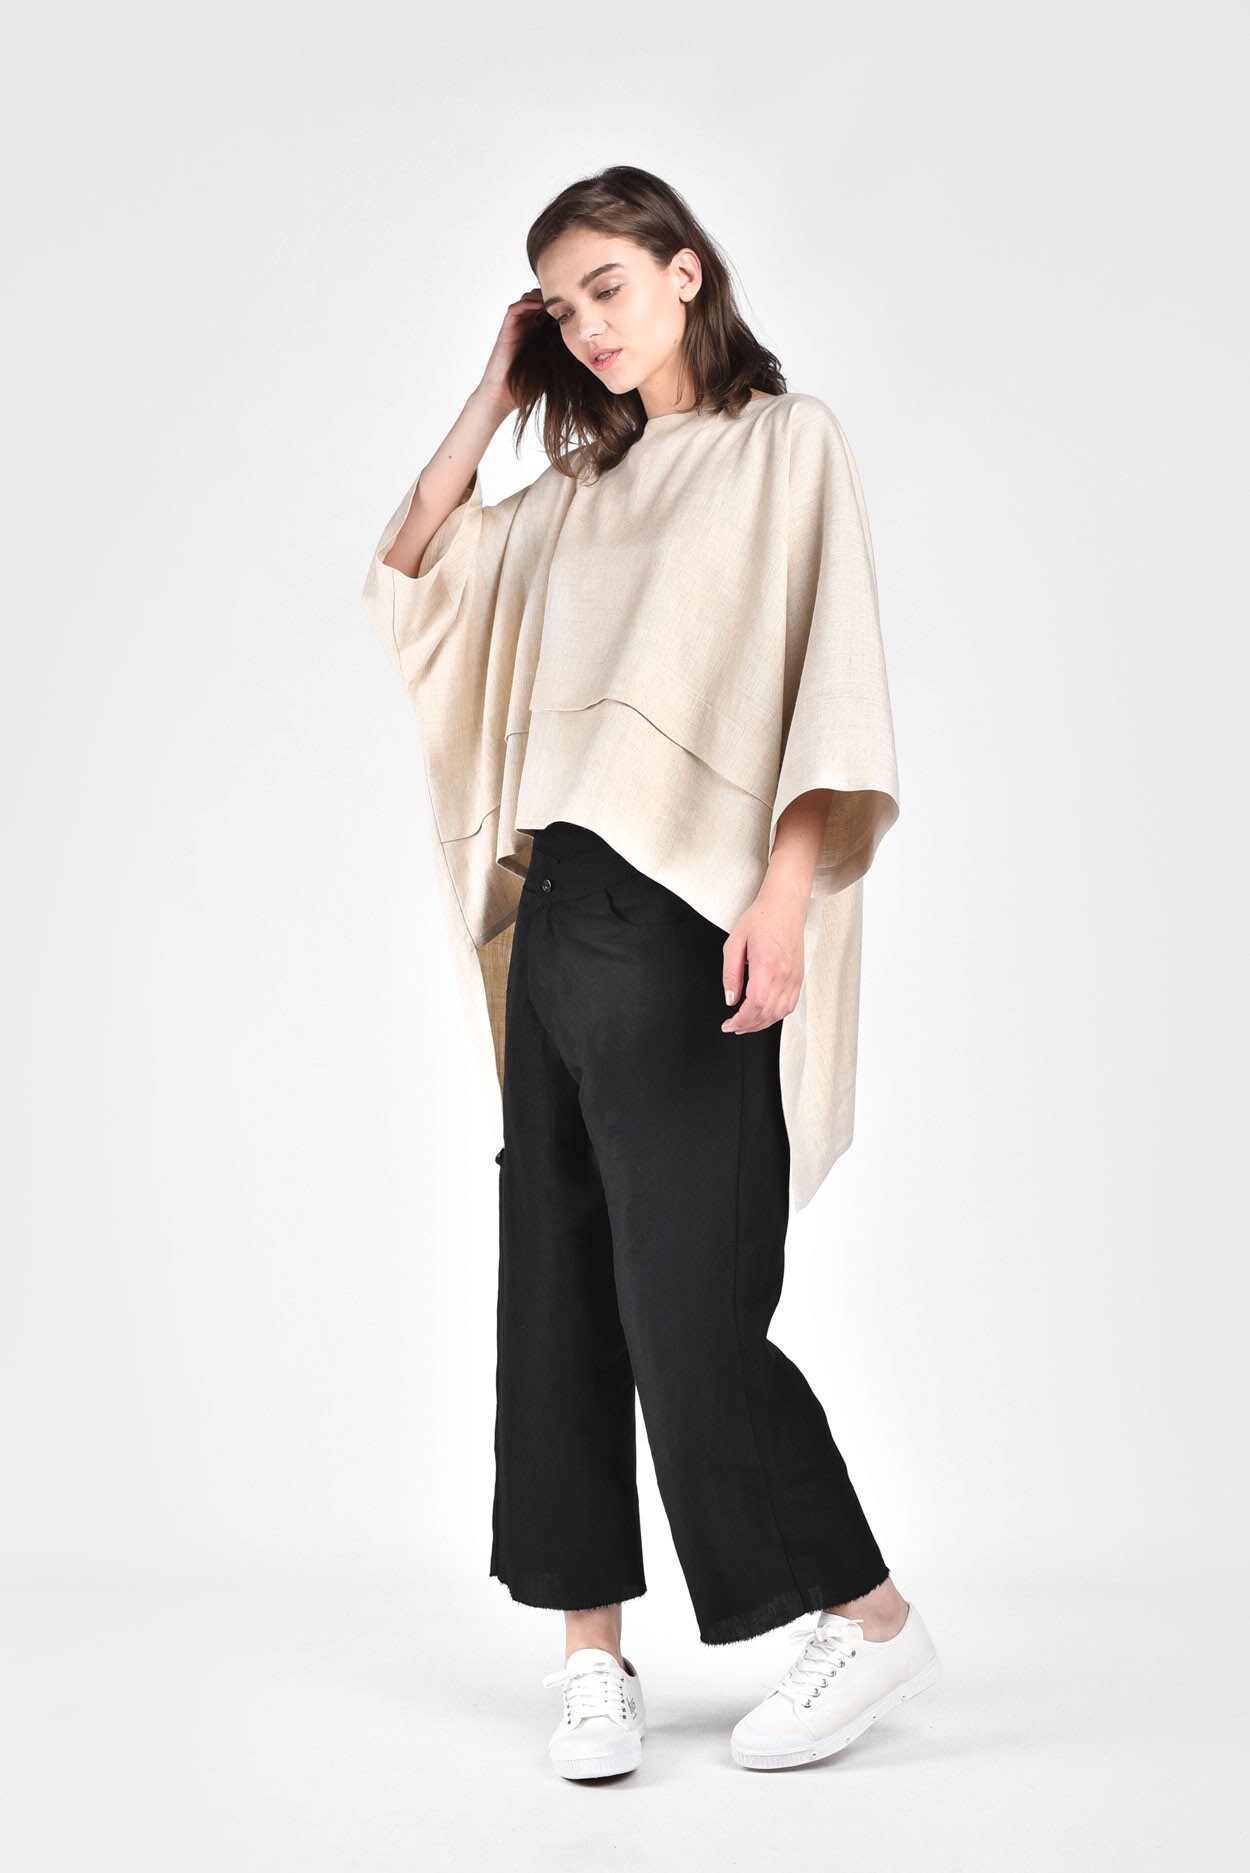 NEW Bohemian Natural Beige Linen Long Back midi sleeves blouse | Etsy